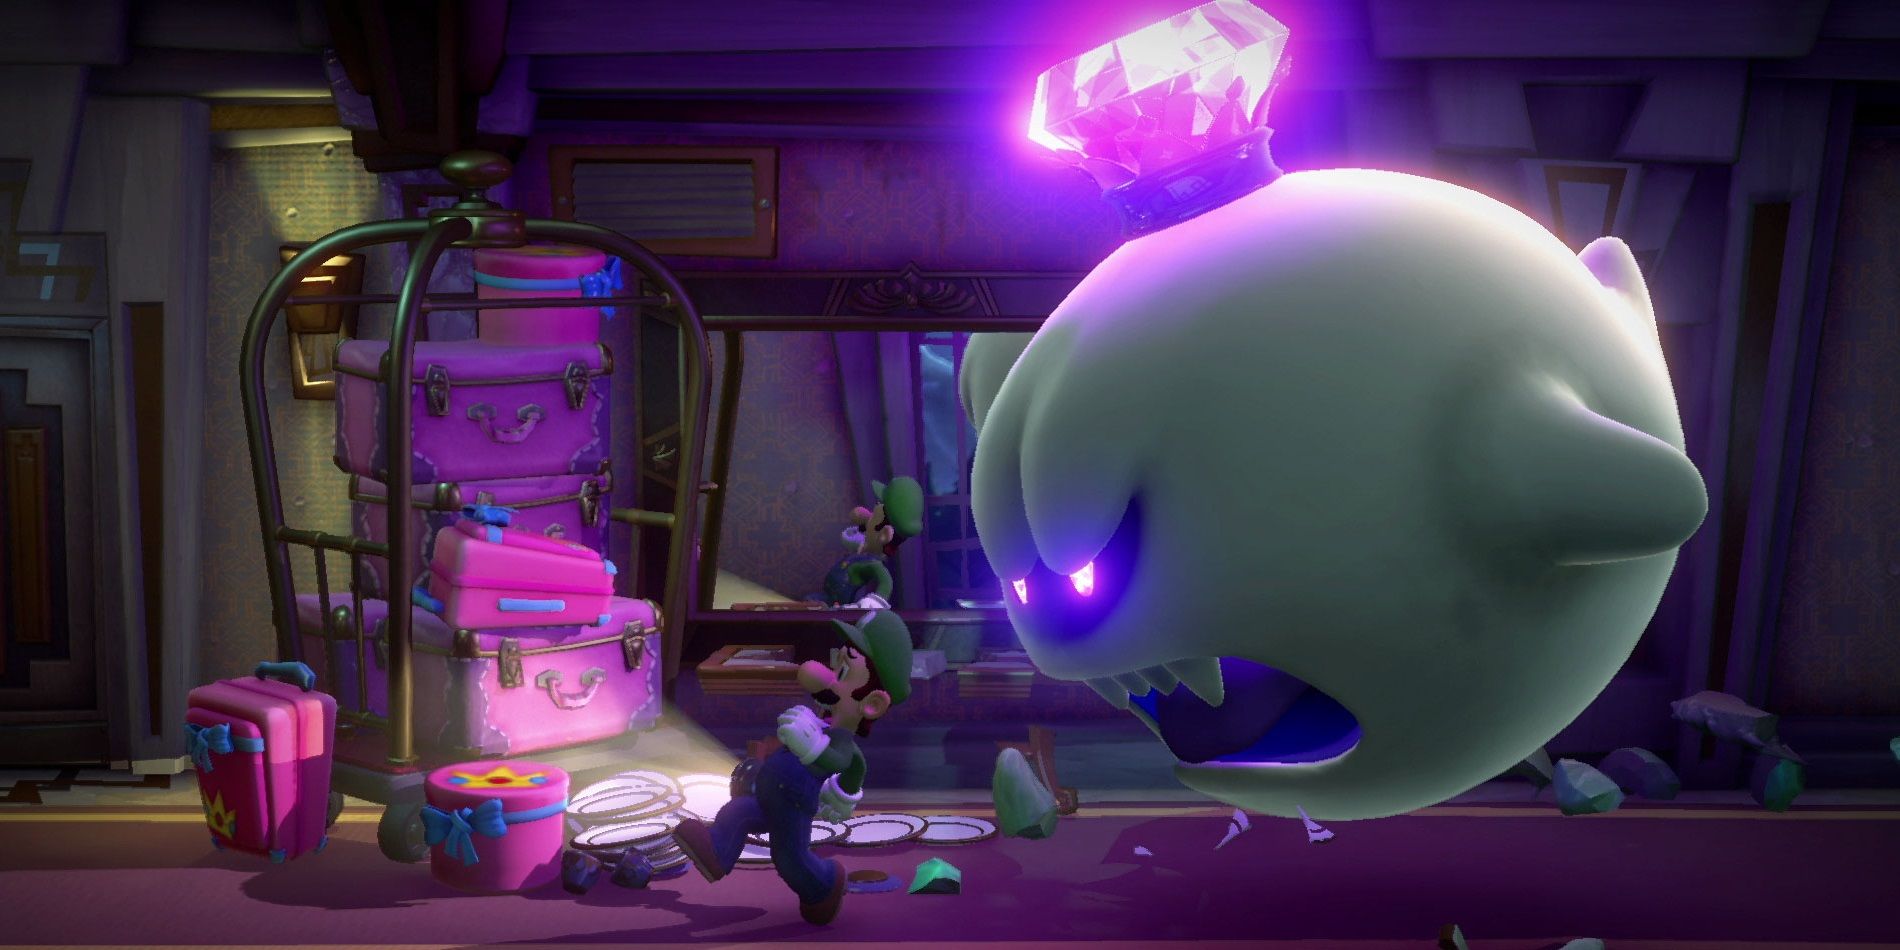 Luigi runs away from King Boo in Luigi's Mansion 3